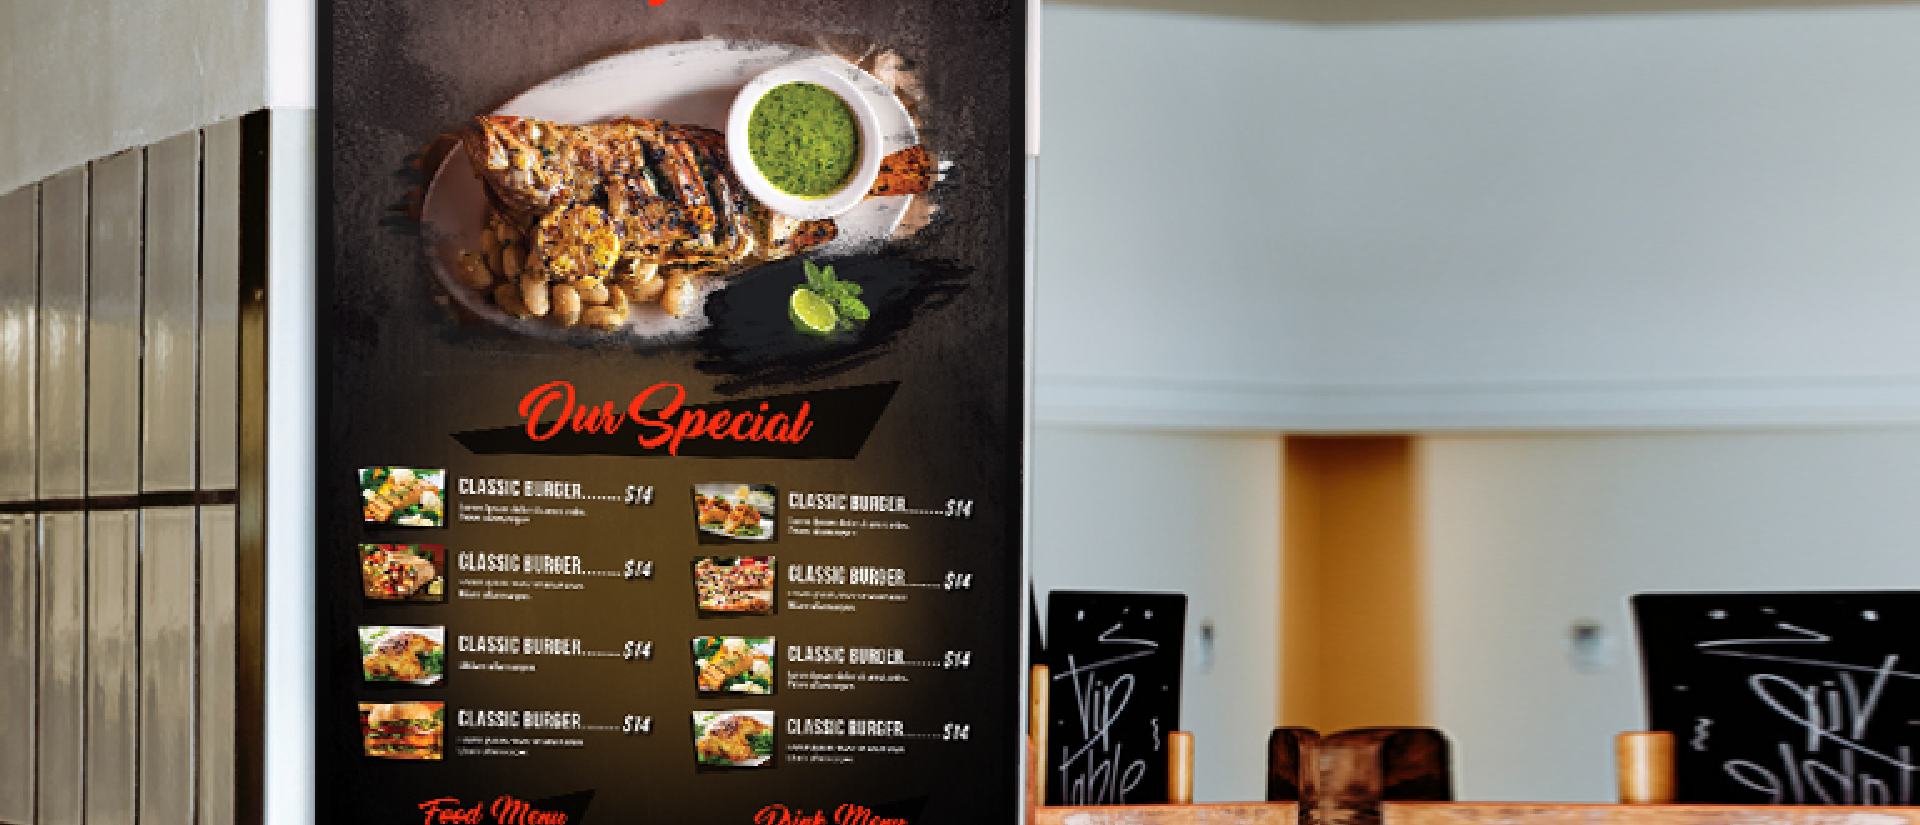 digital signage displaying restaurant menu